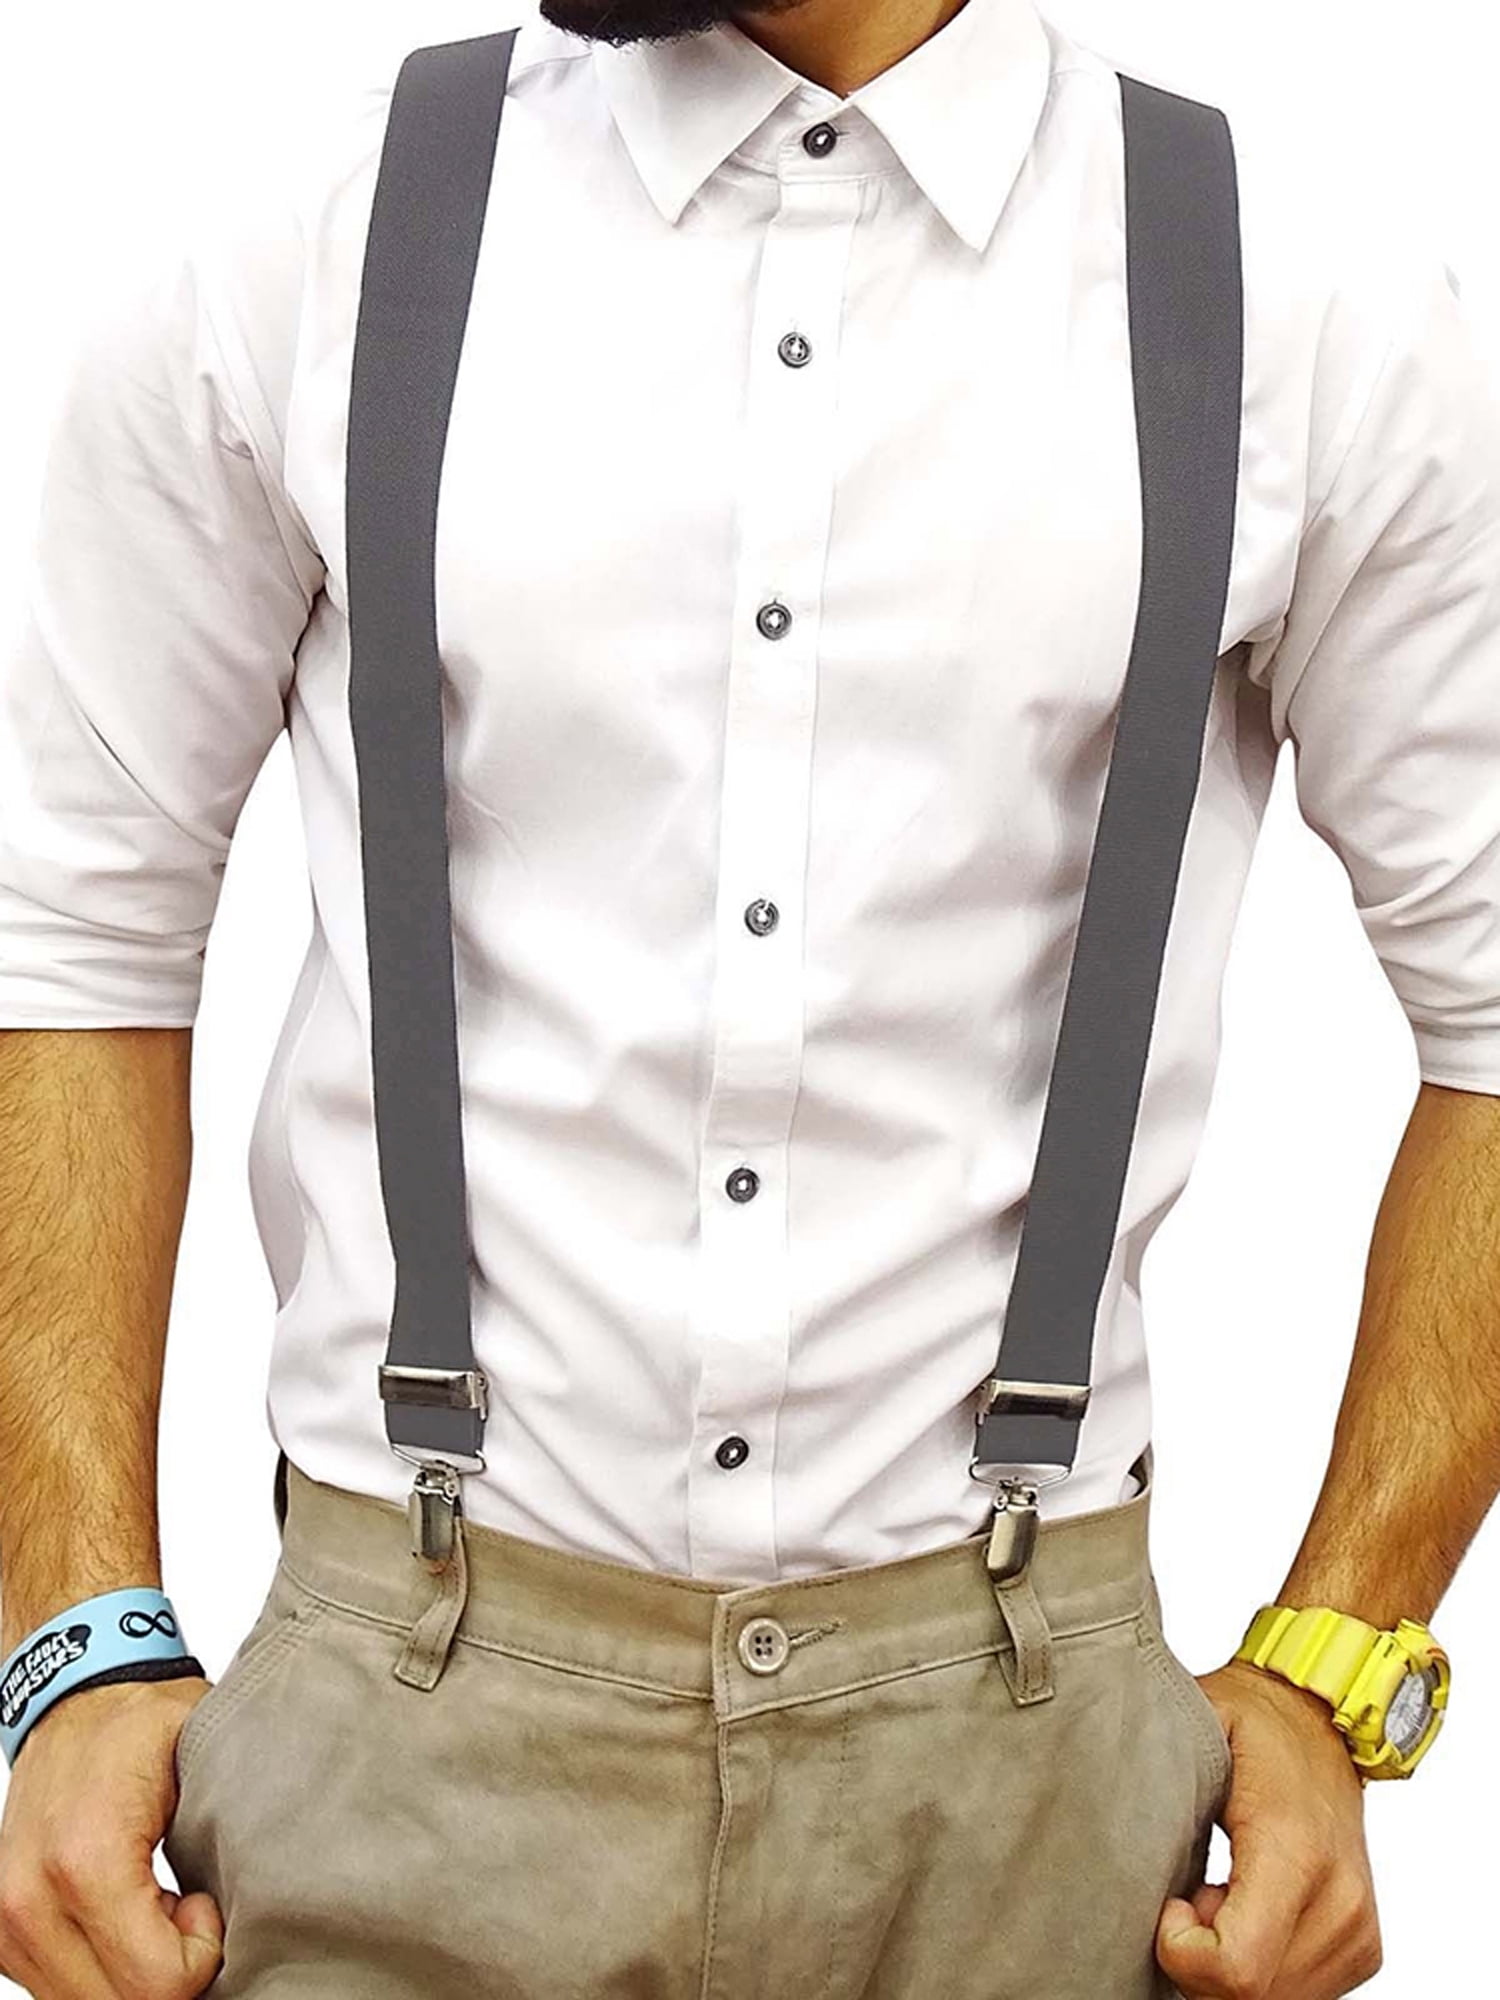 Men's Unisex Clip-on Braces Elastic Y-back Suspender "Green" Width 1 1/2 inch 